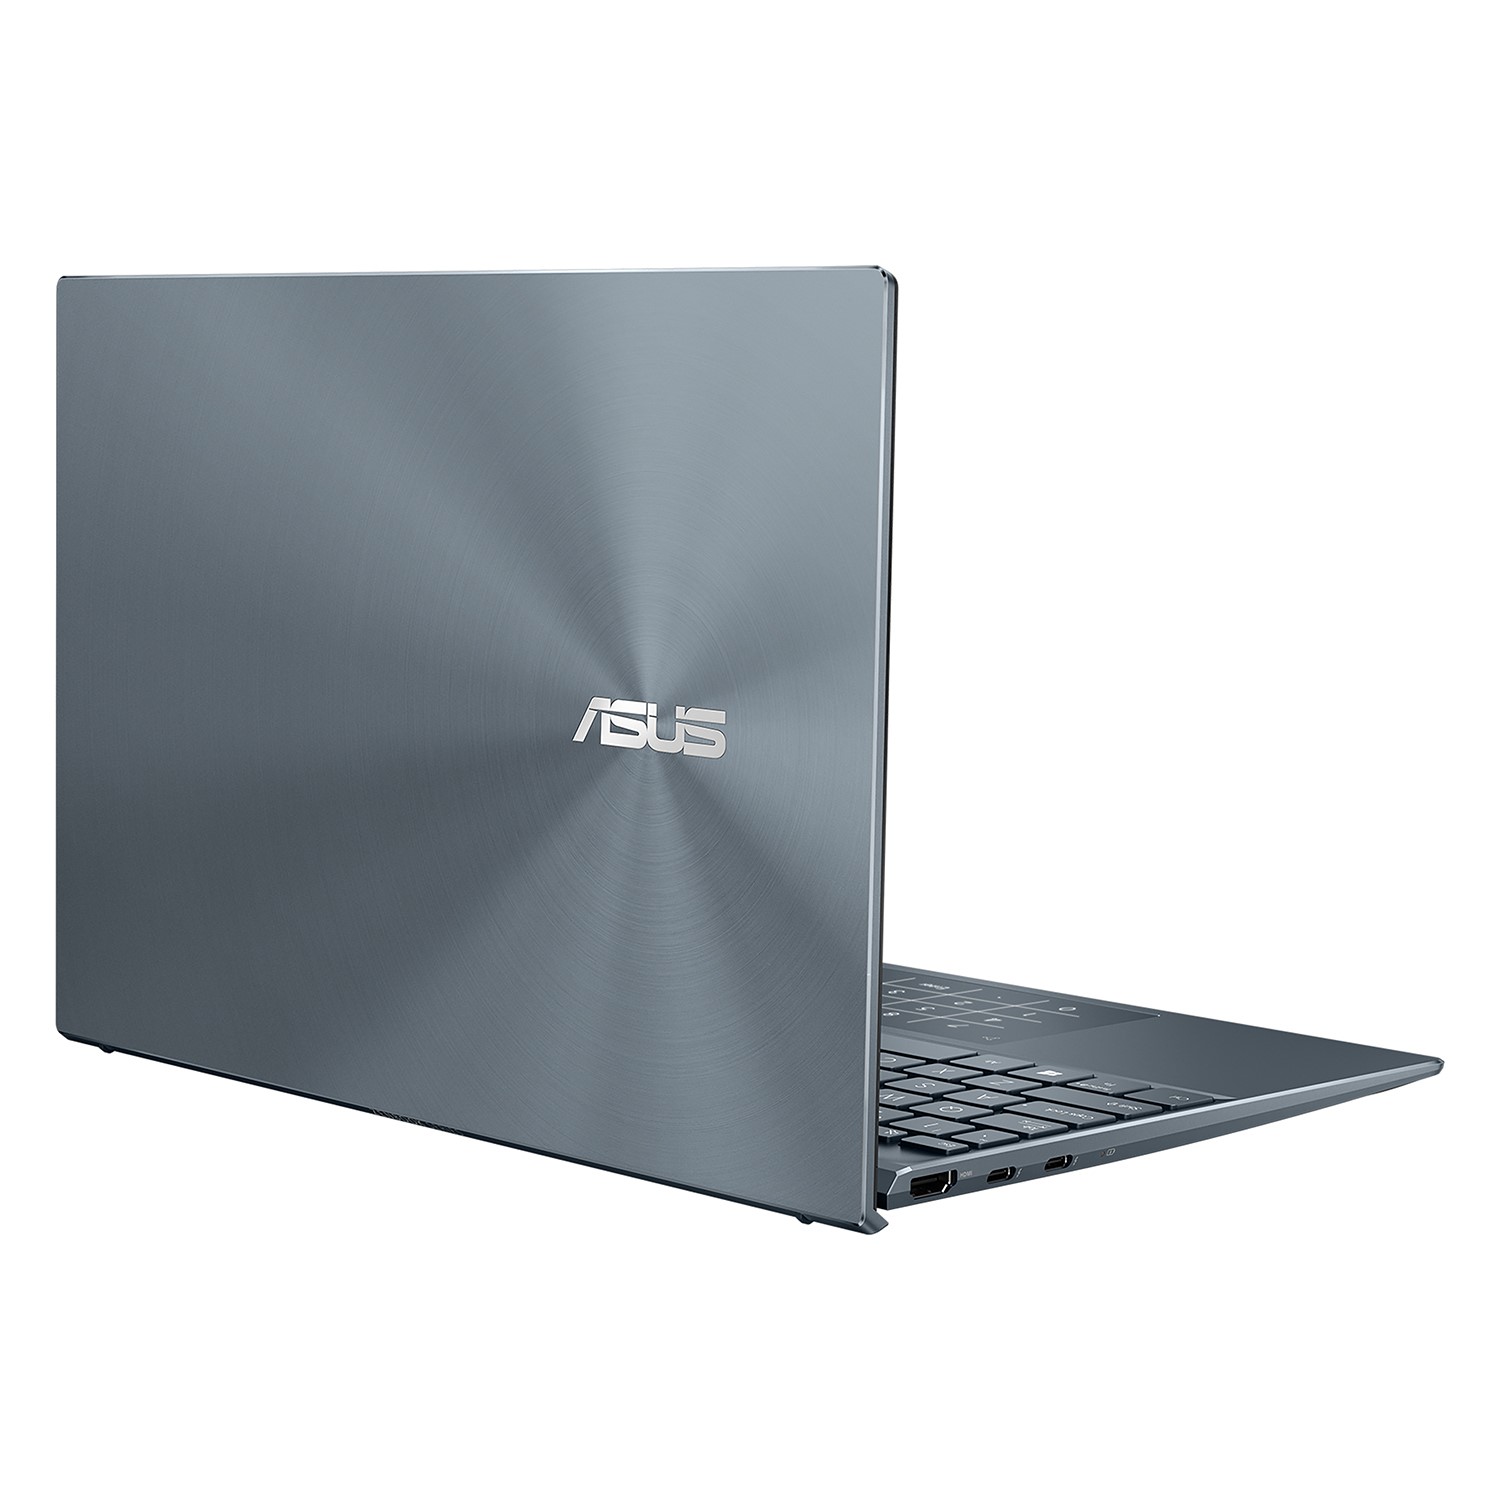 Asus ZenBook 13 UX325JA Core i5-1035G1 8GB 32GB Optane 512GB SSD 13.3  Inch Windows 10 Laptop Laptops Direct